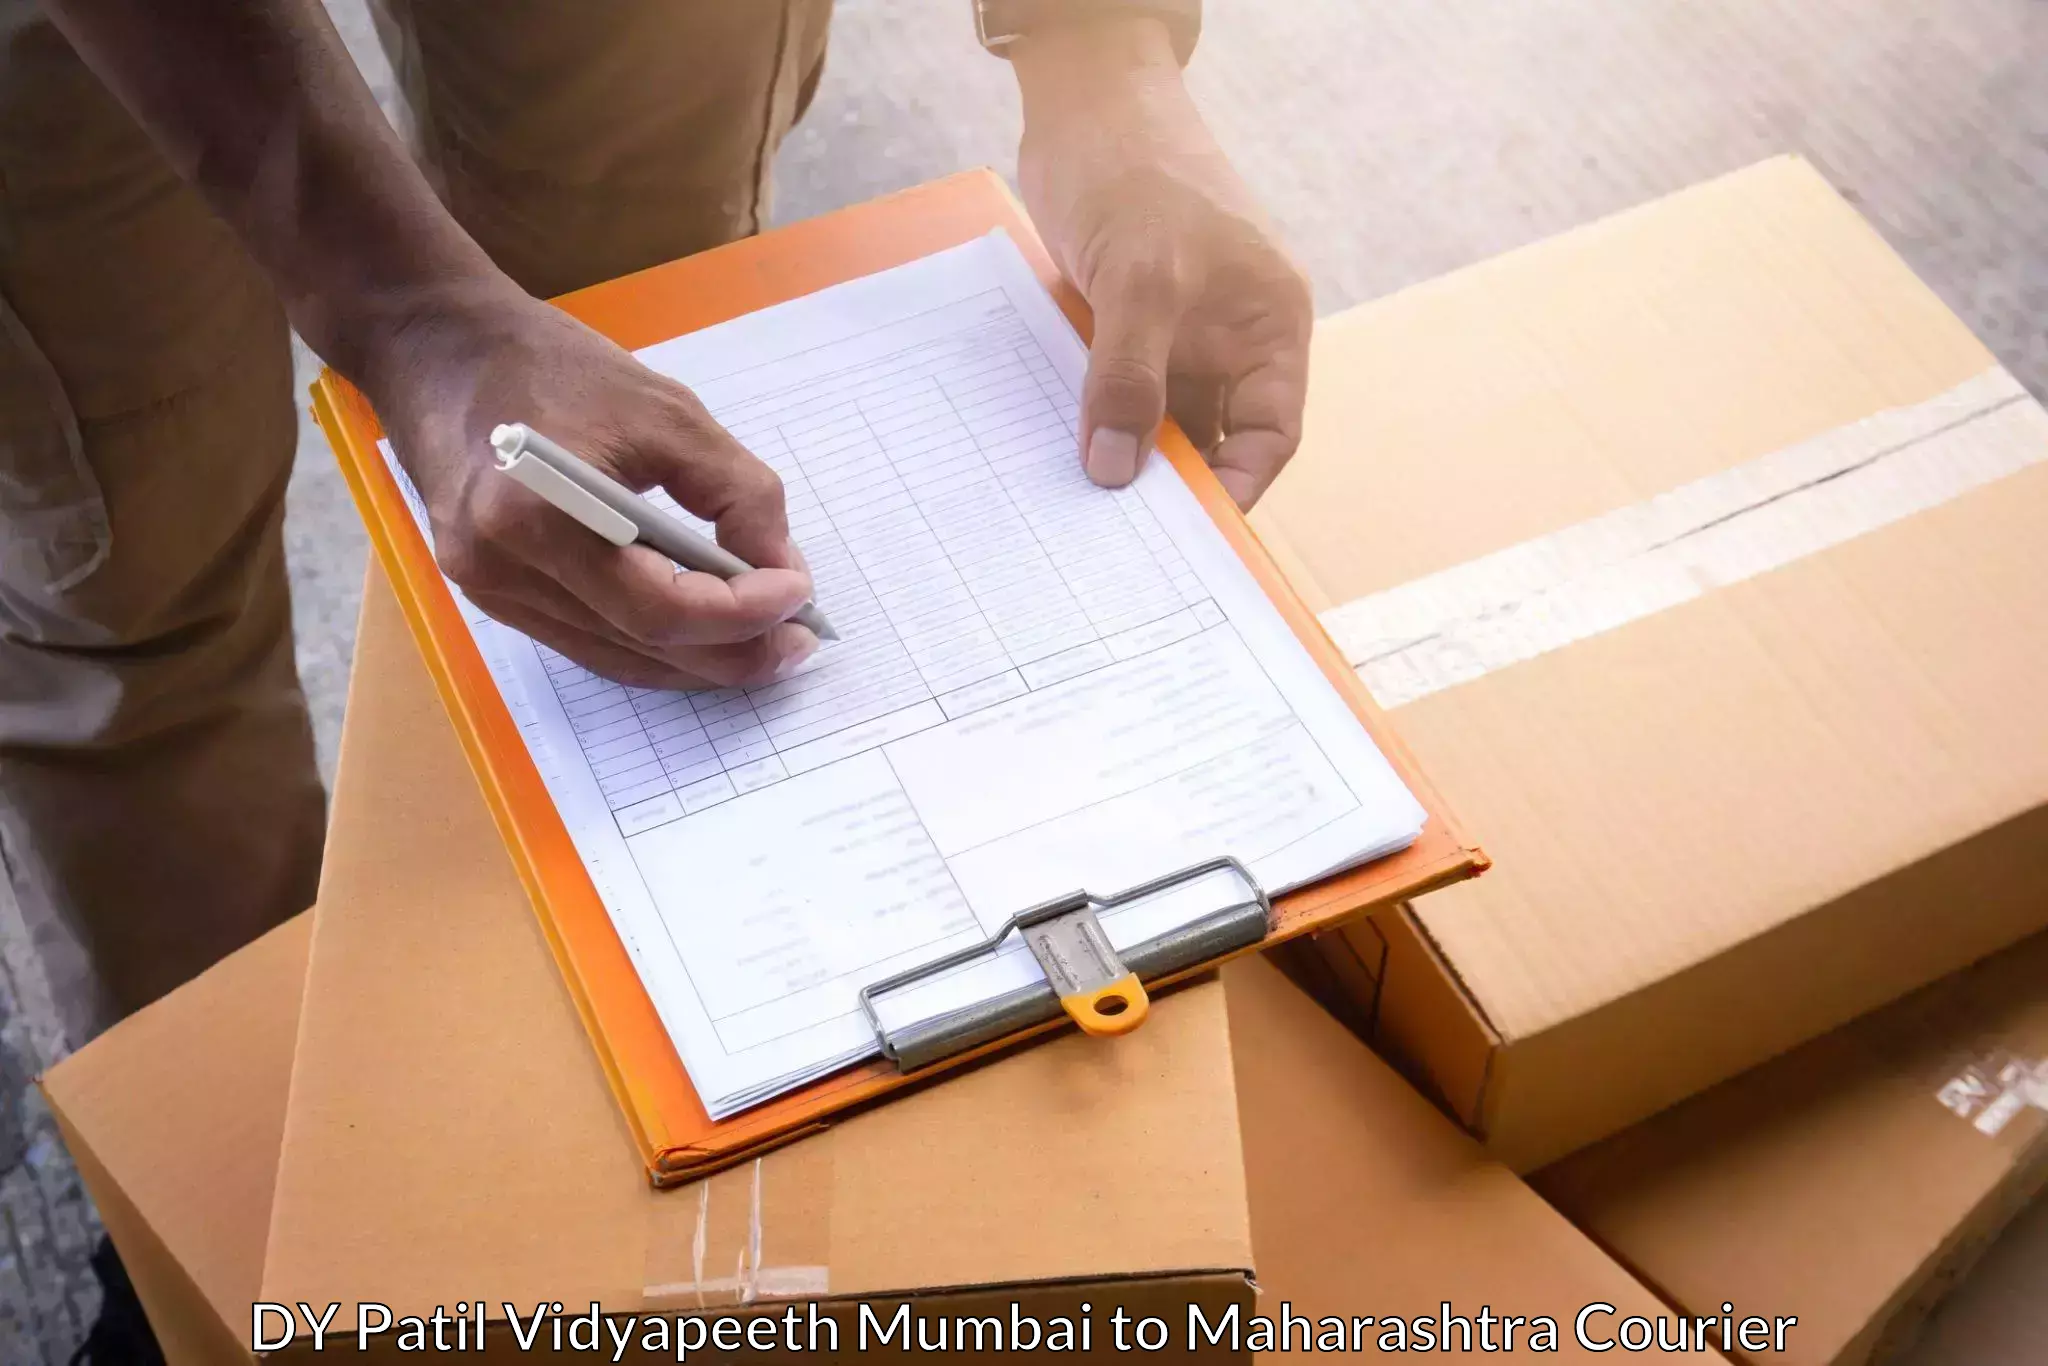 Express mail solutions in DY Patil Vidyapeeth Mumbai to Akkalkuva